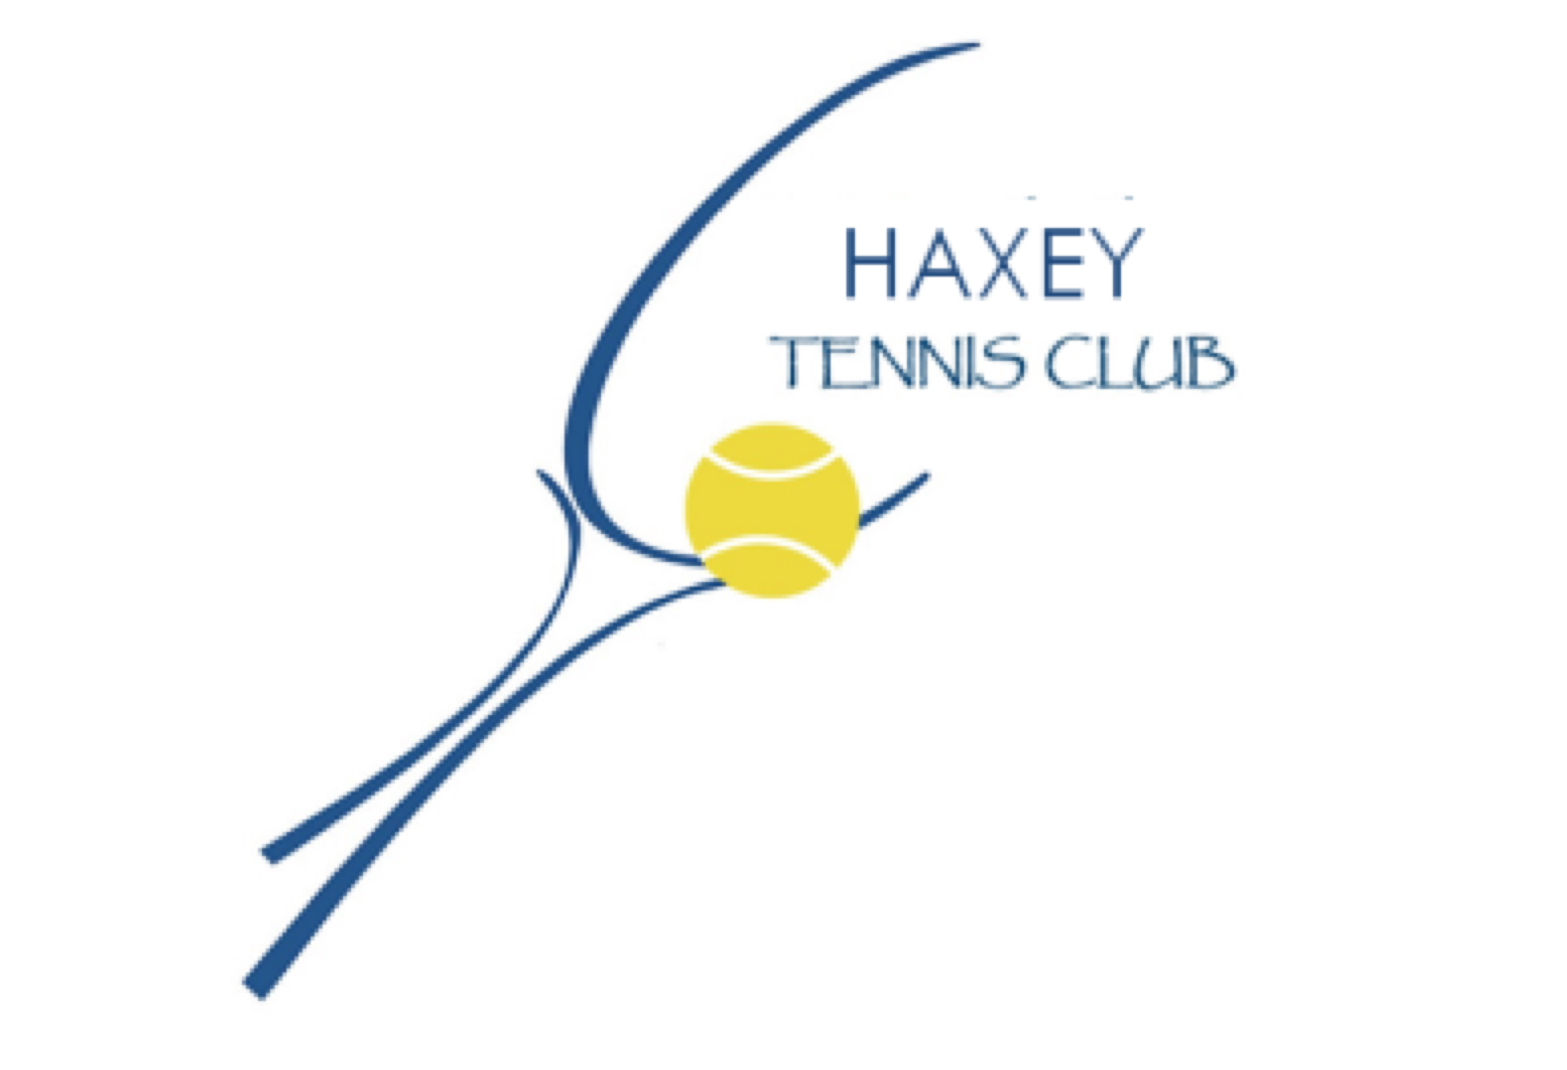 Haxey Tennis Club